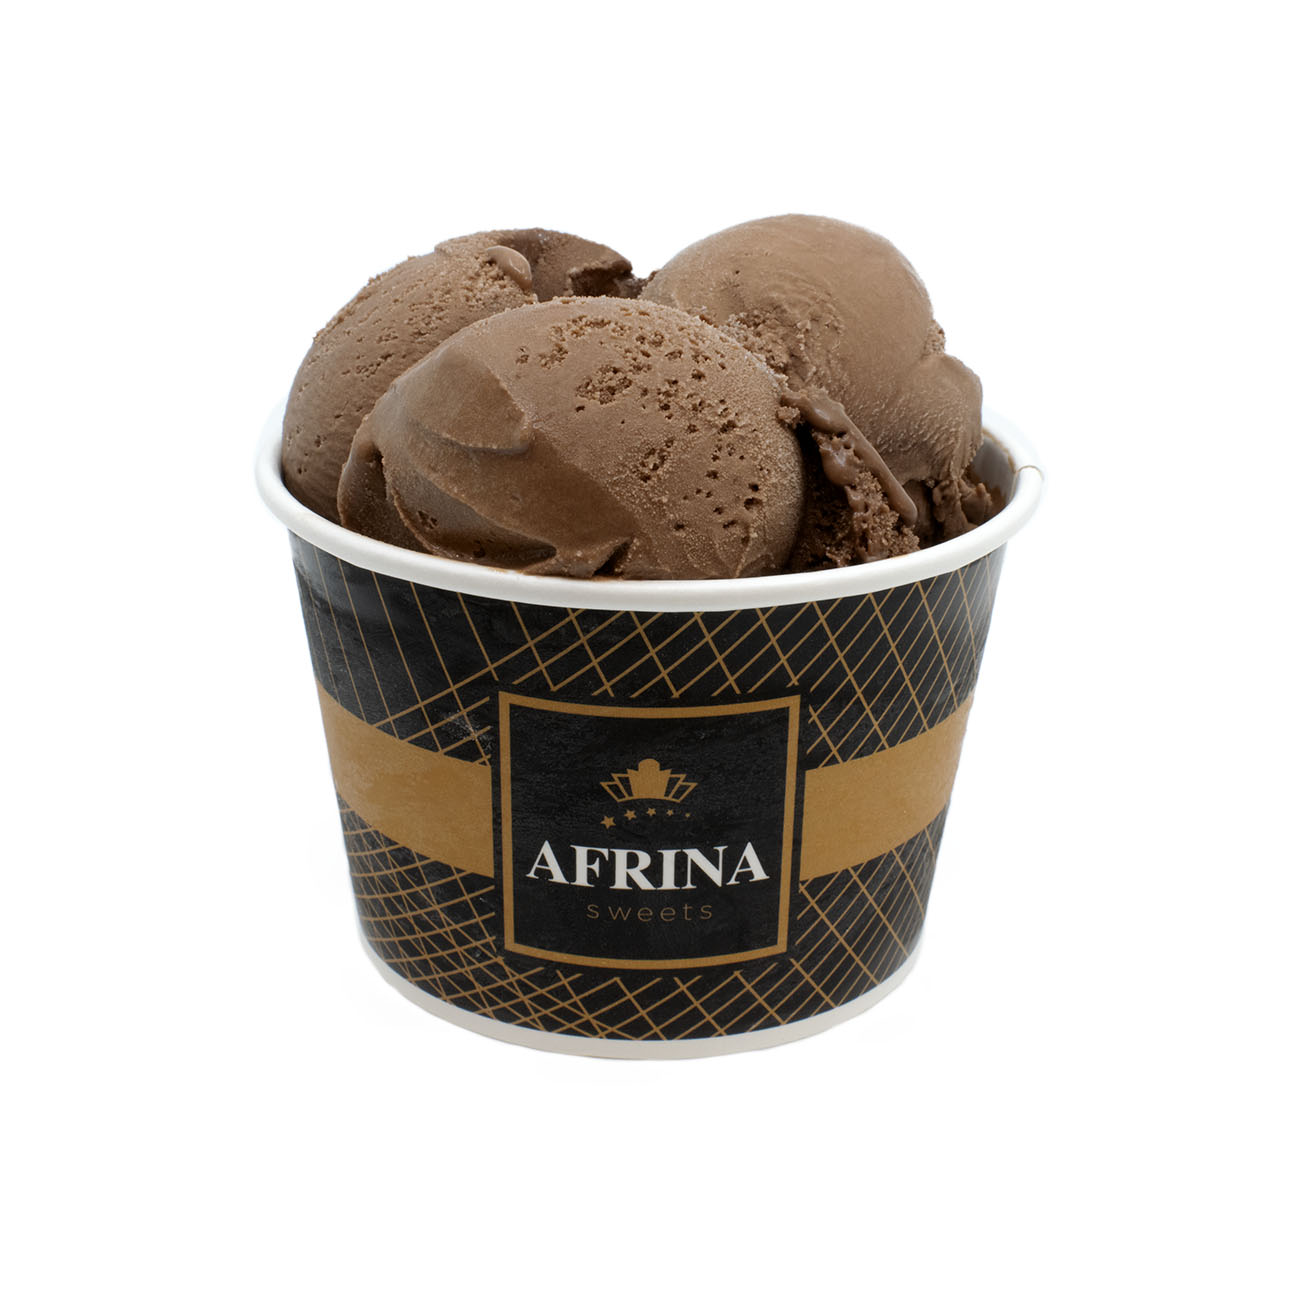 Afrina Ice-cream Chocolate 08 oz